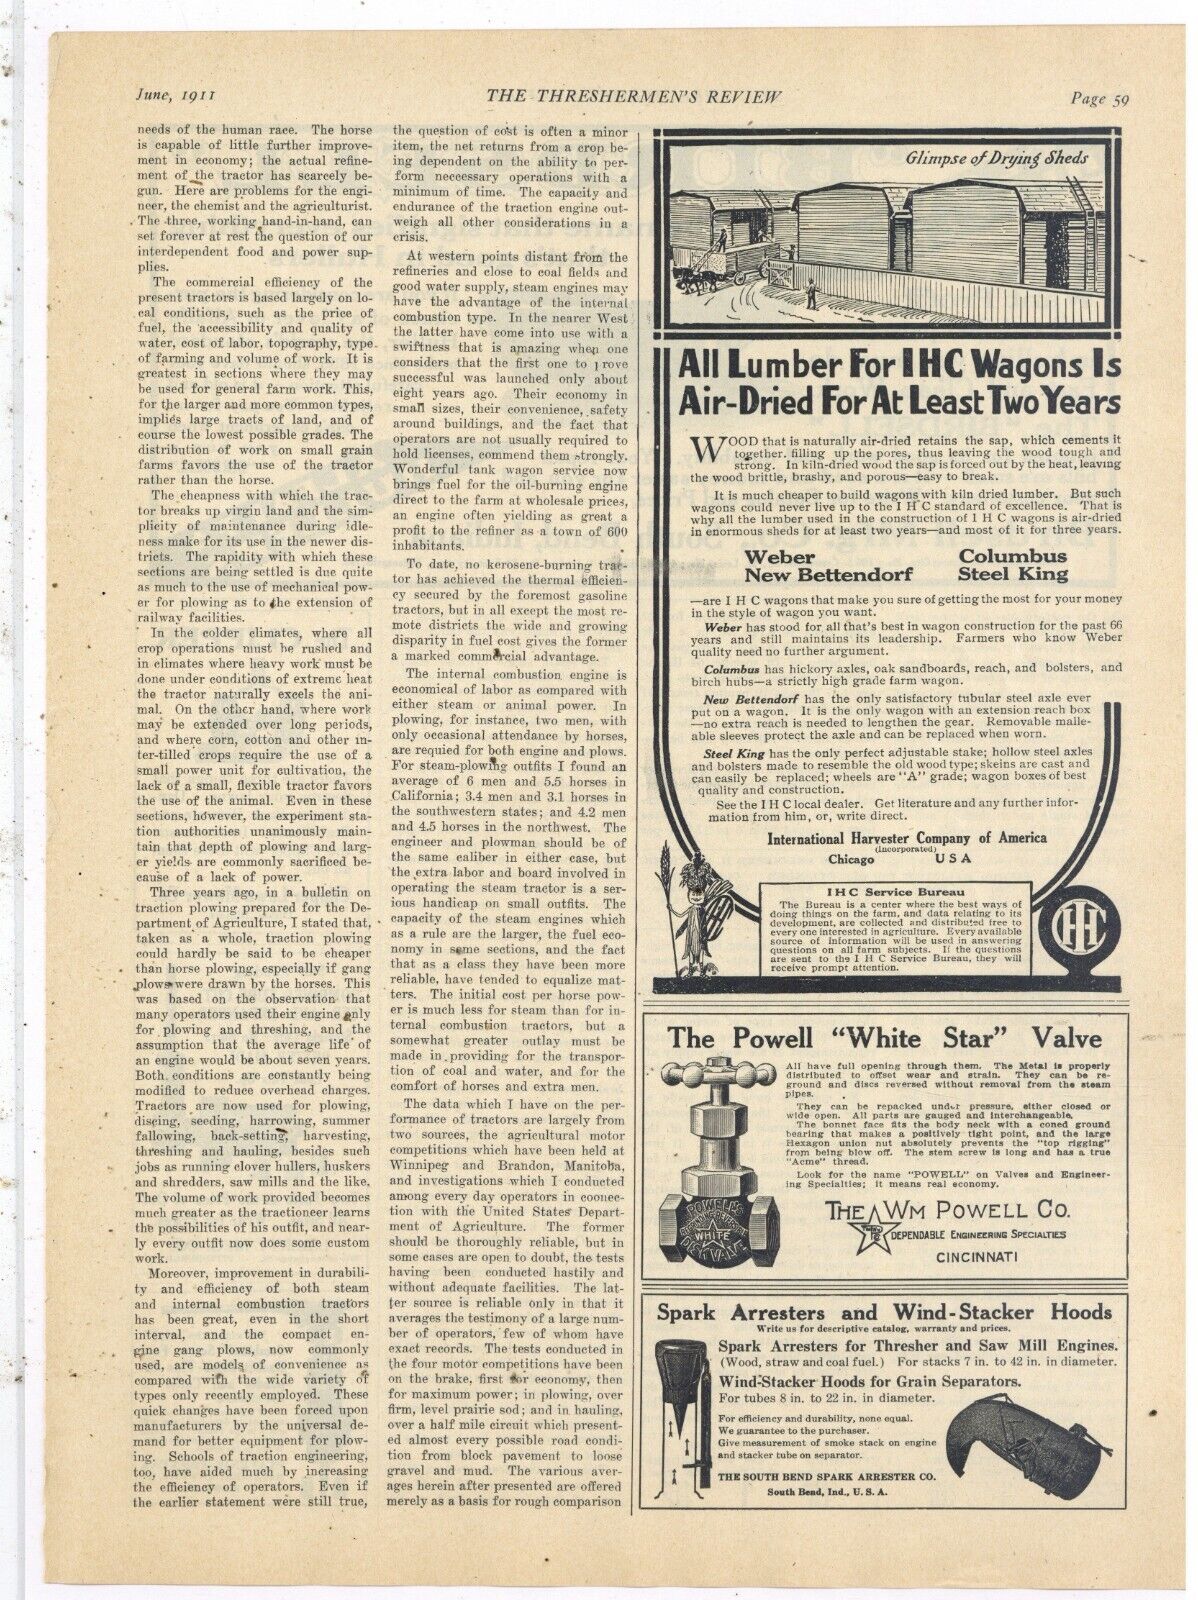 1911 IHC International IH Ad: Weber, New Bettendorf, Columbus, Steel King Wagons